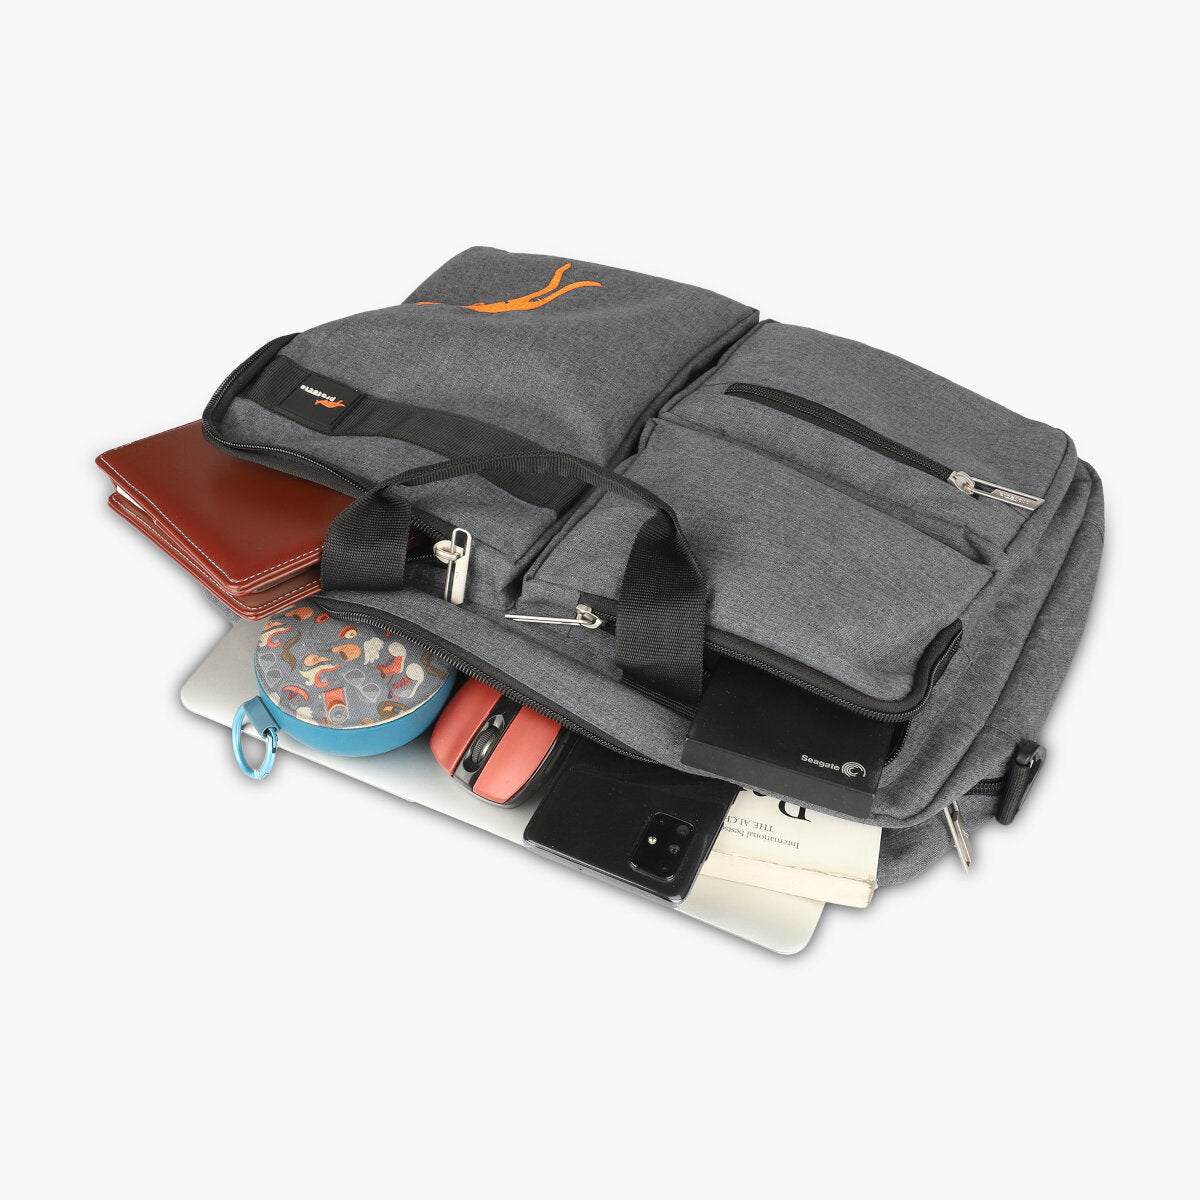 Stone Grey, Protecta Leap Laptop Office Bag-Main